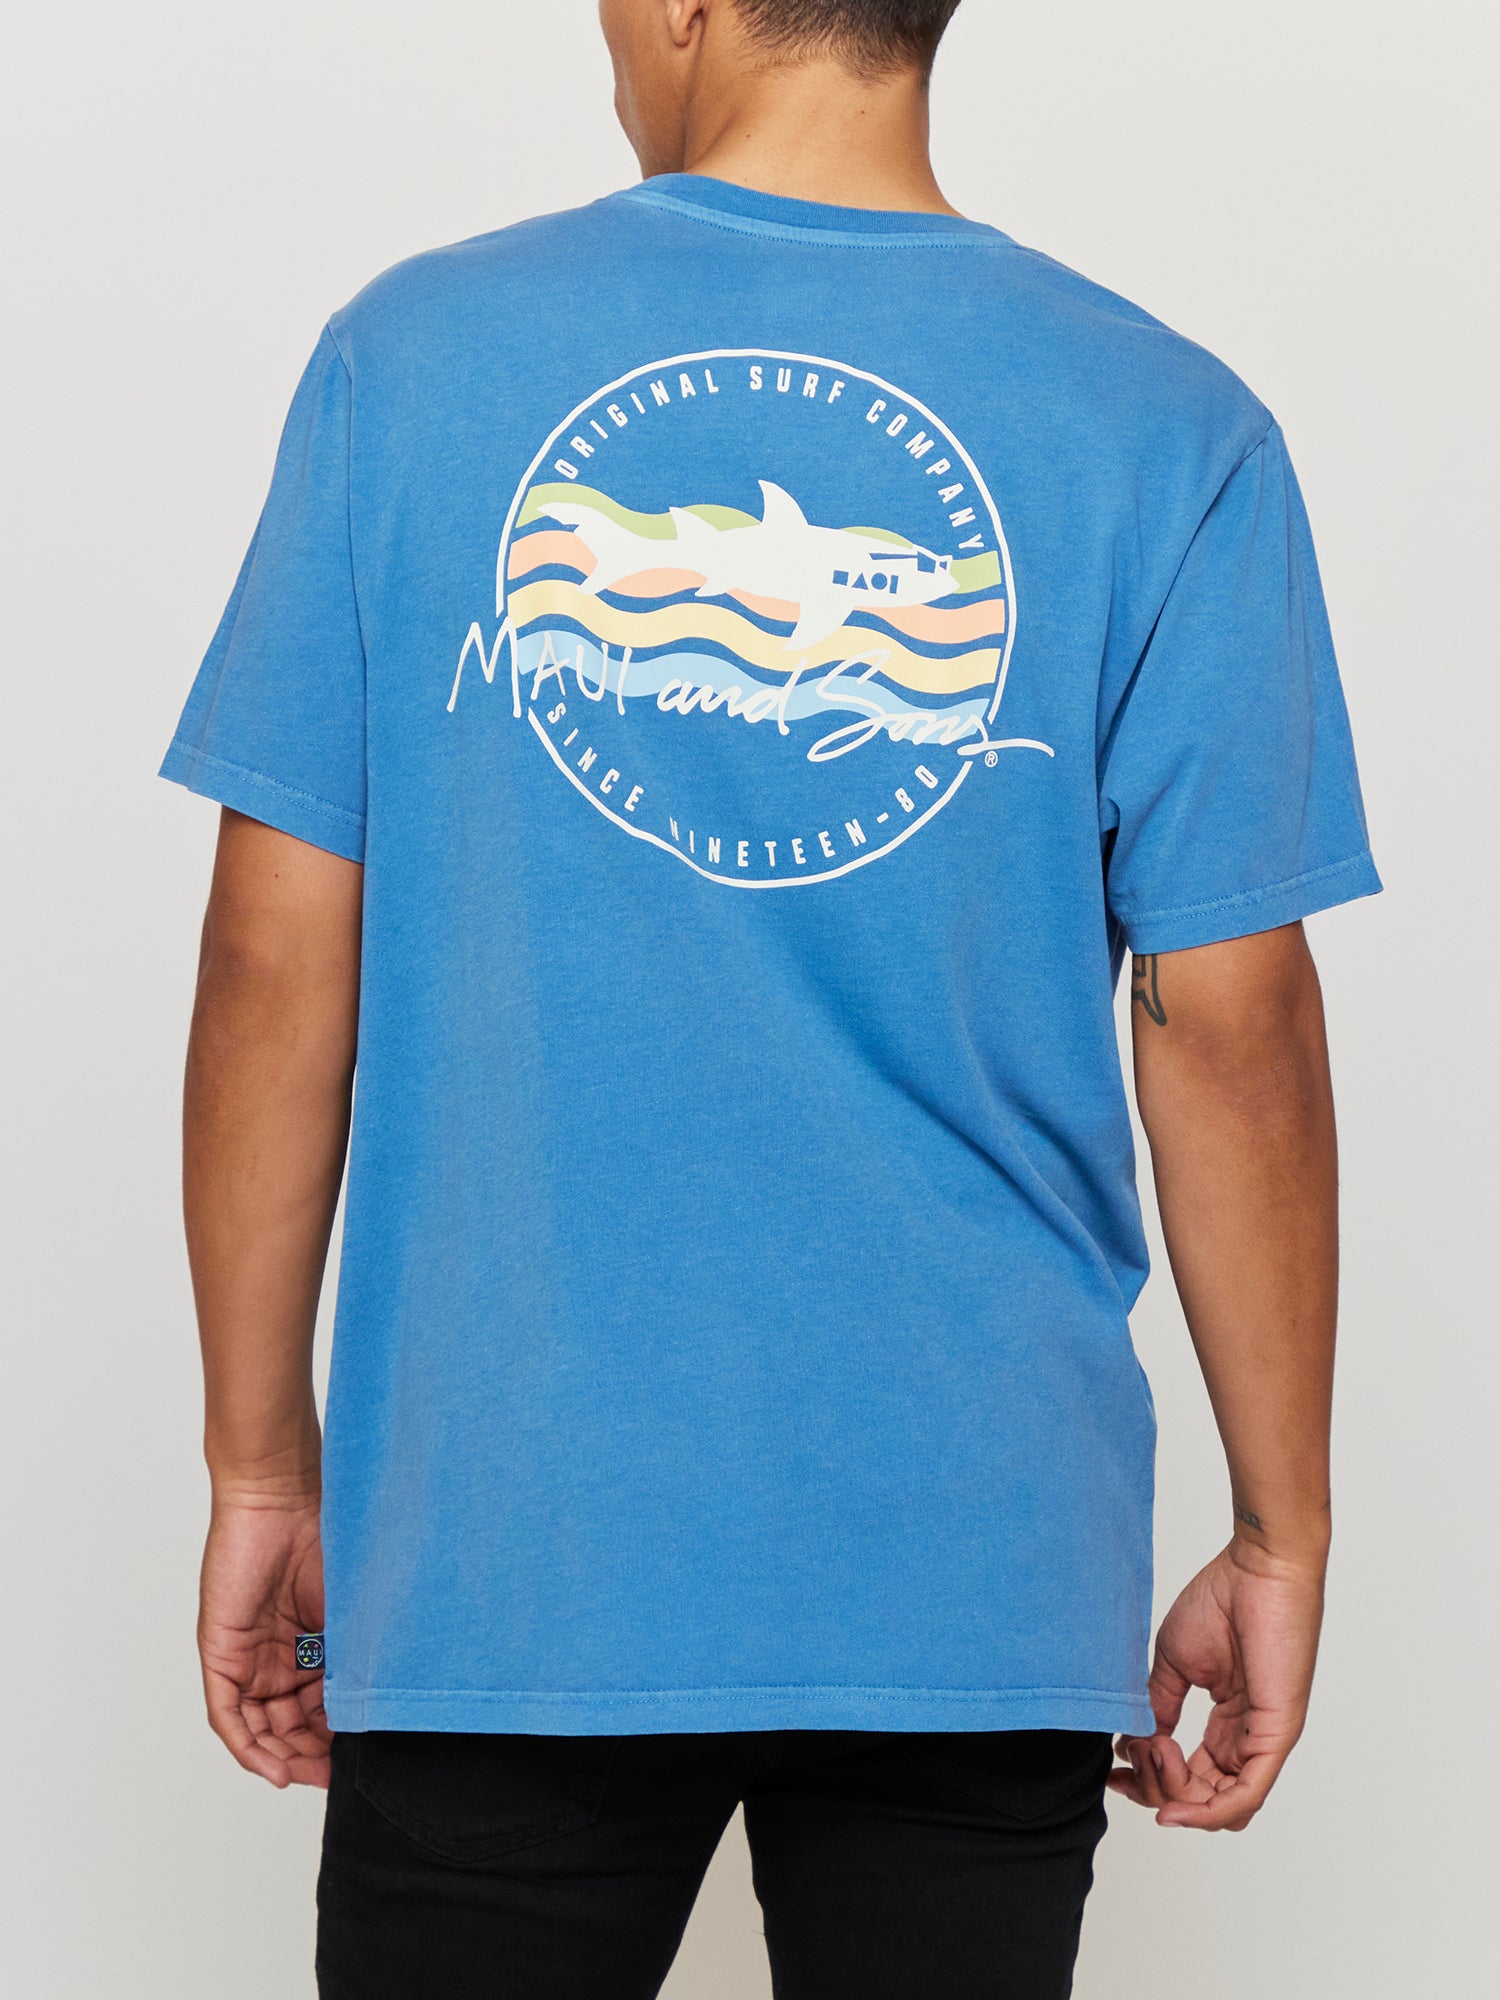 Mens T-Shirts  Maui and Sons